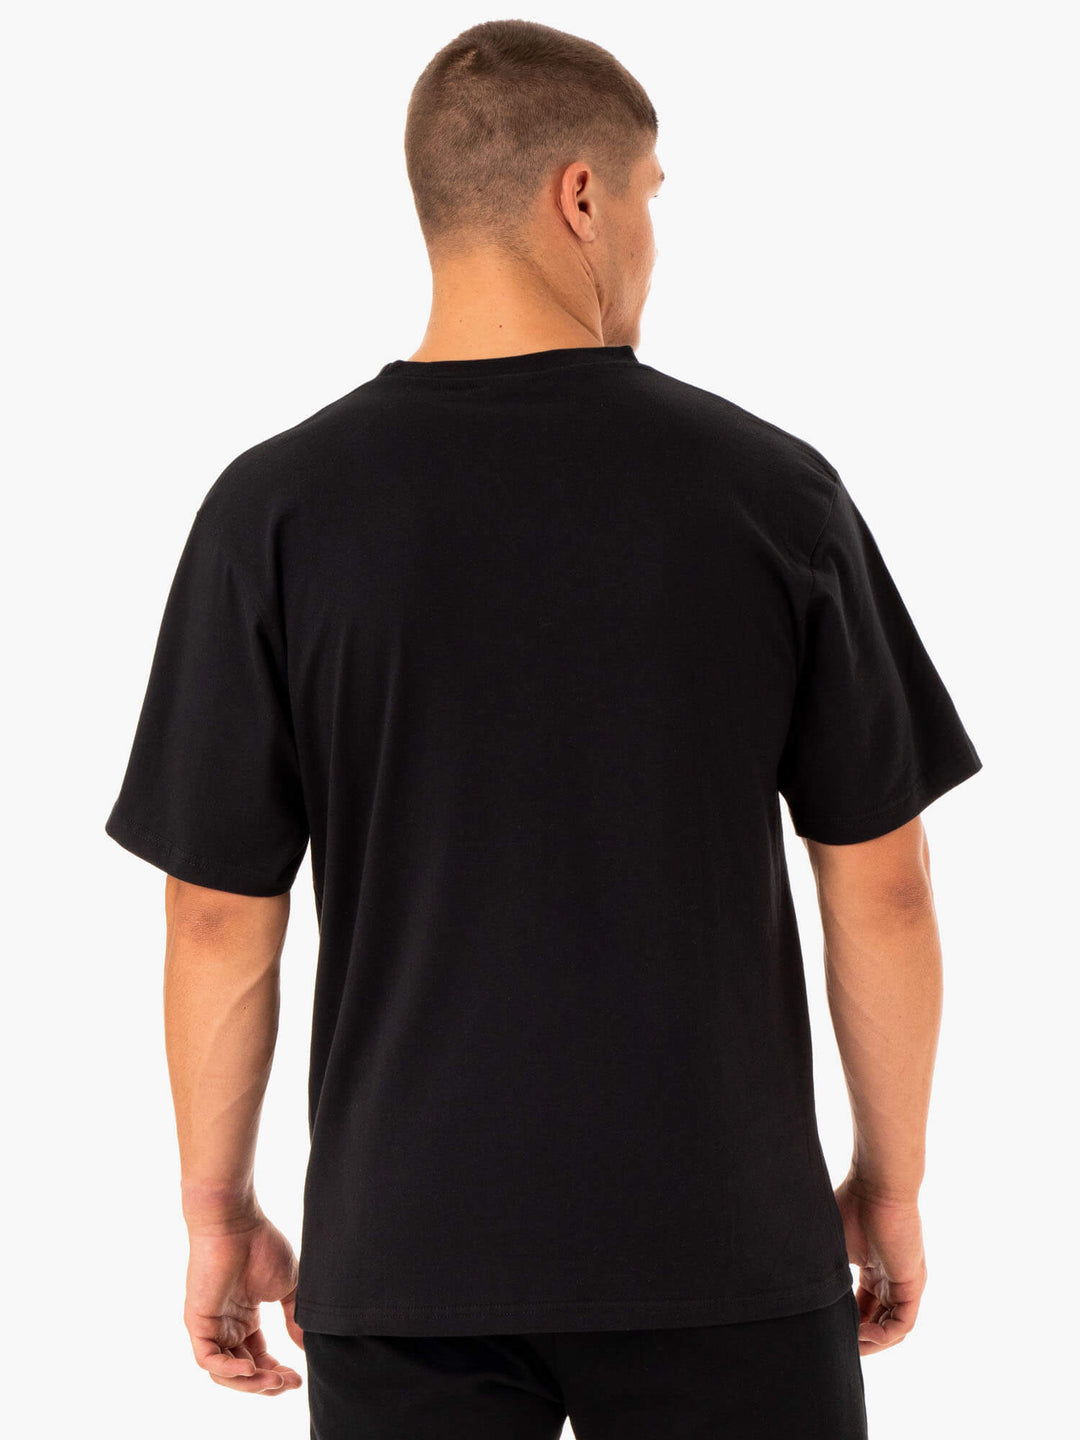 Ryderwear Mens Oversized T-Shirt - Black M